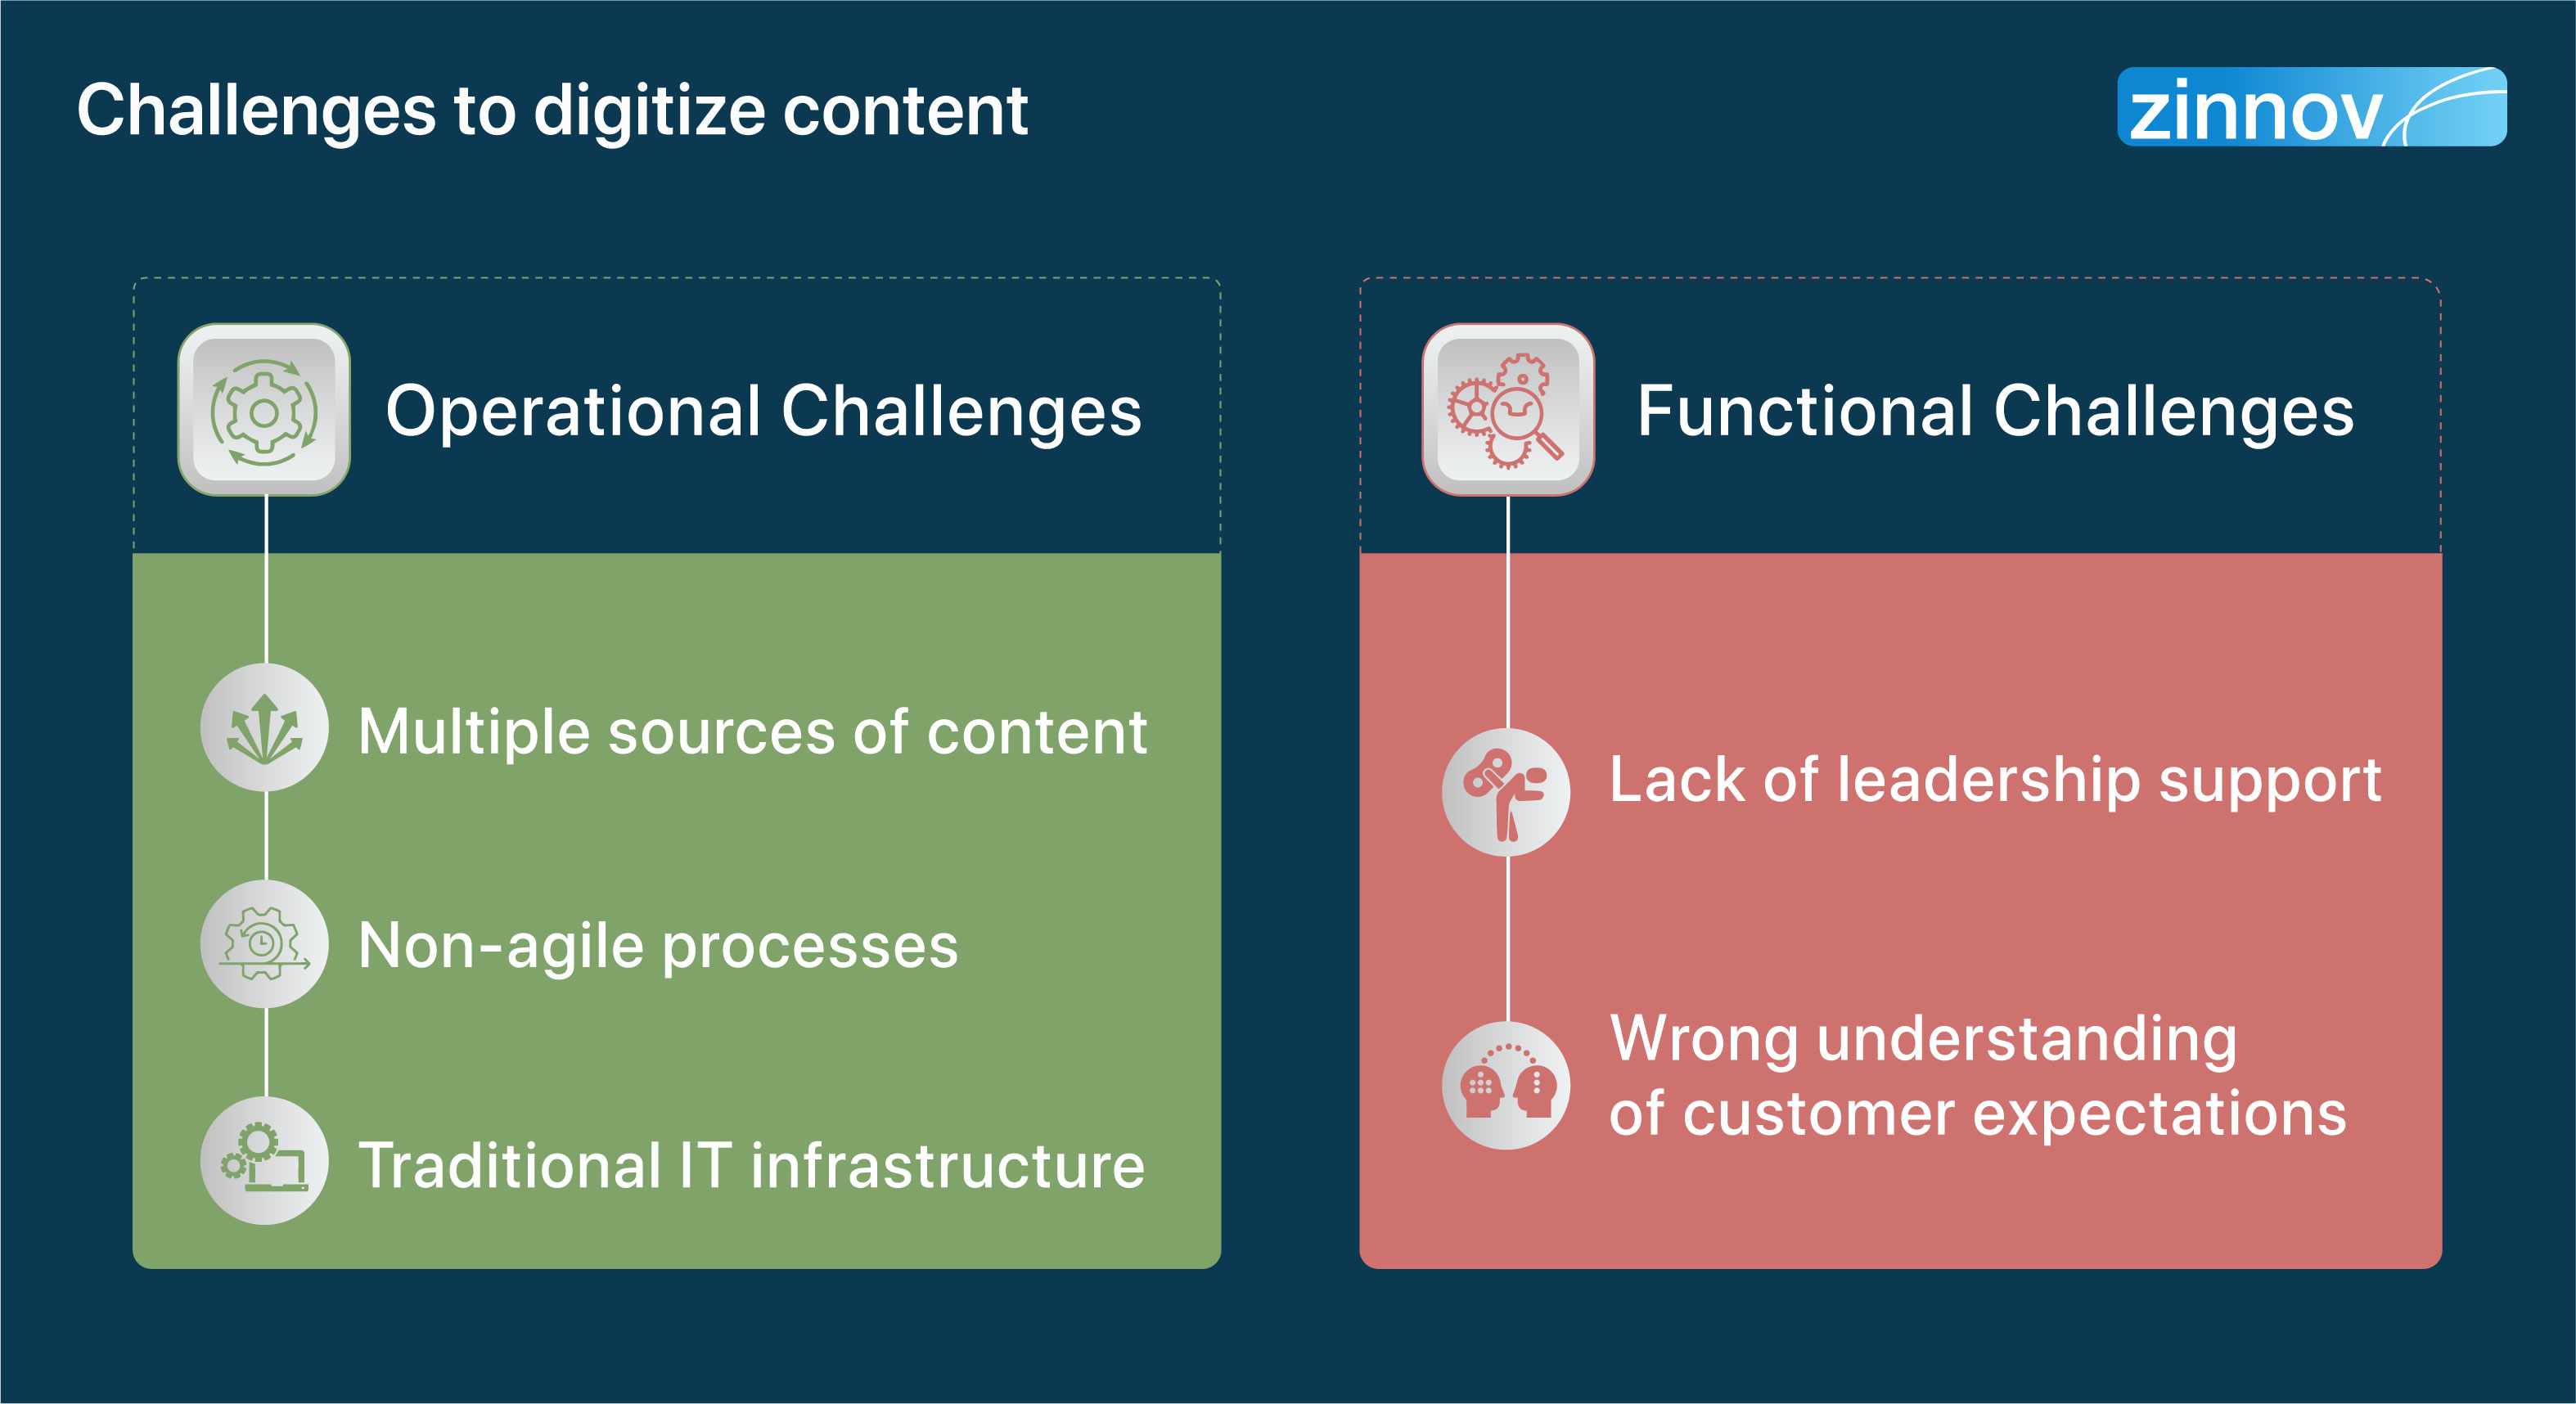 Challenges to content digitization